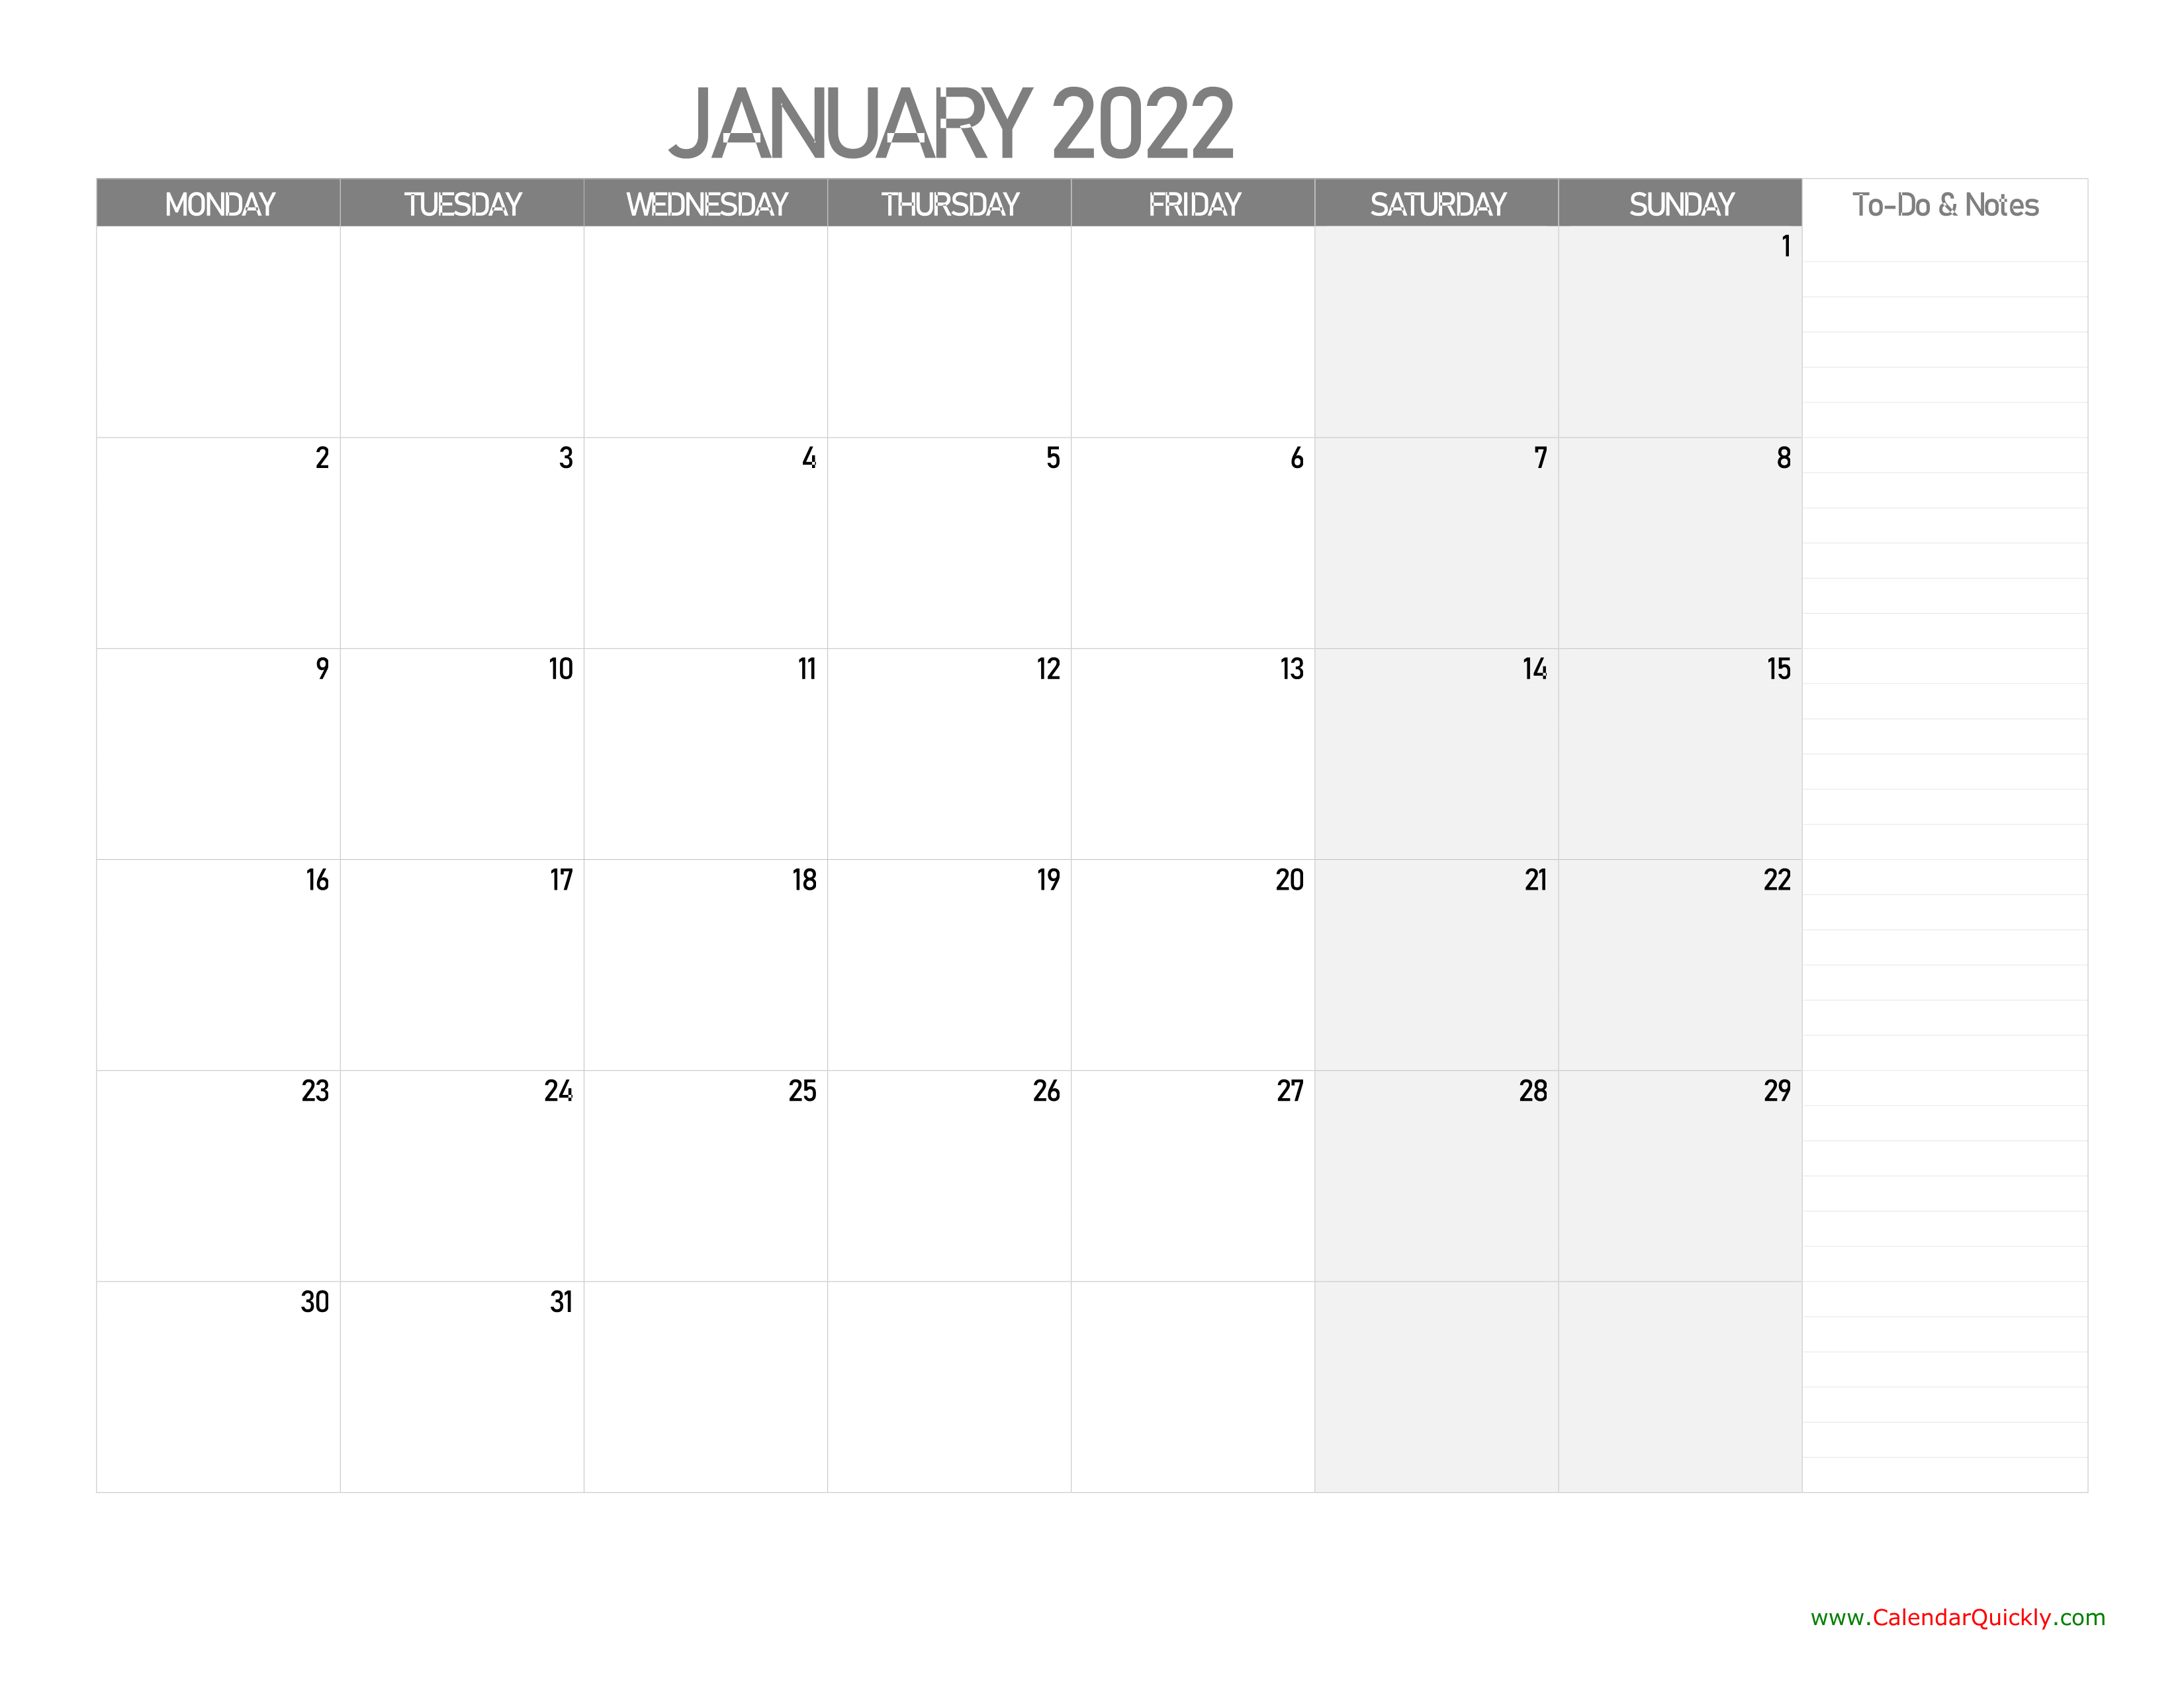 january-2022-monthly-calendar-printable-february-2022-calendar-monday